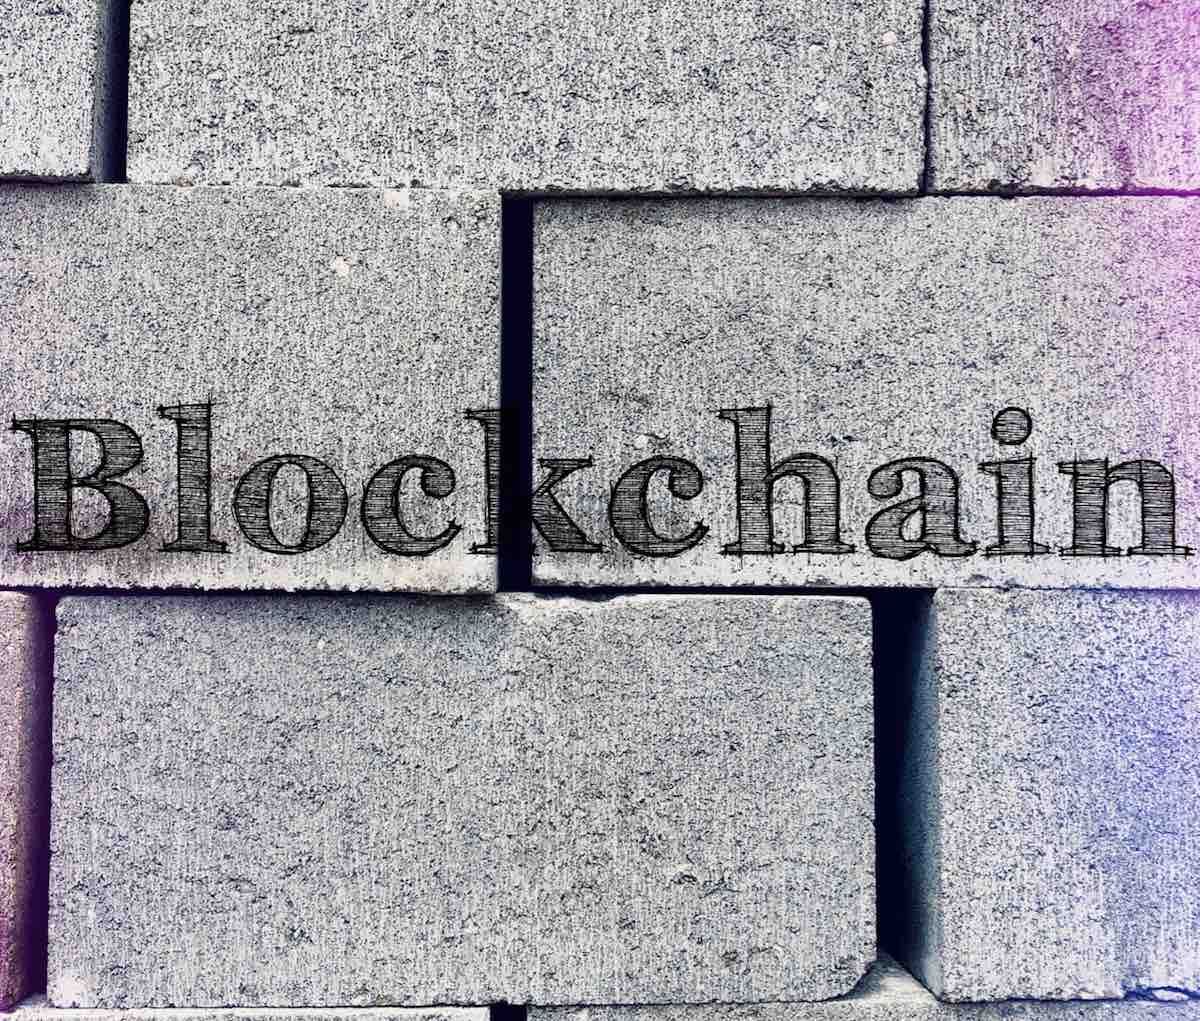 India’s “First” Blockchain Protocol Eleven01 Kicks Off Testnet